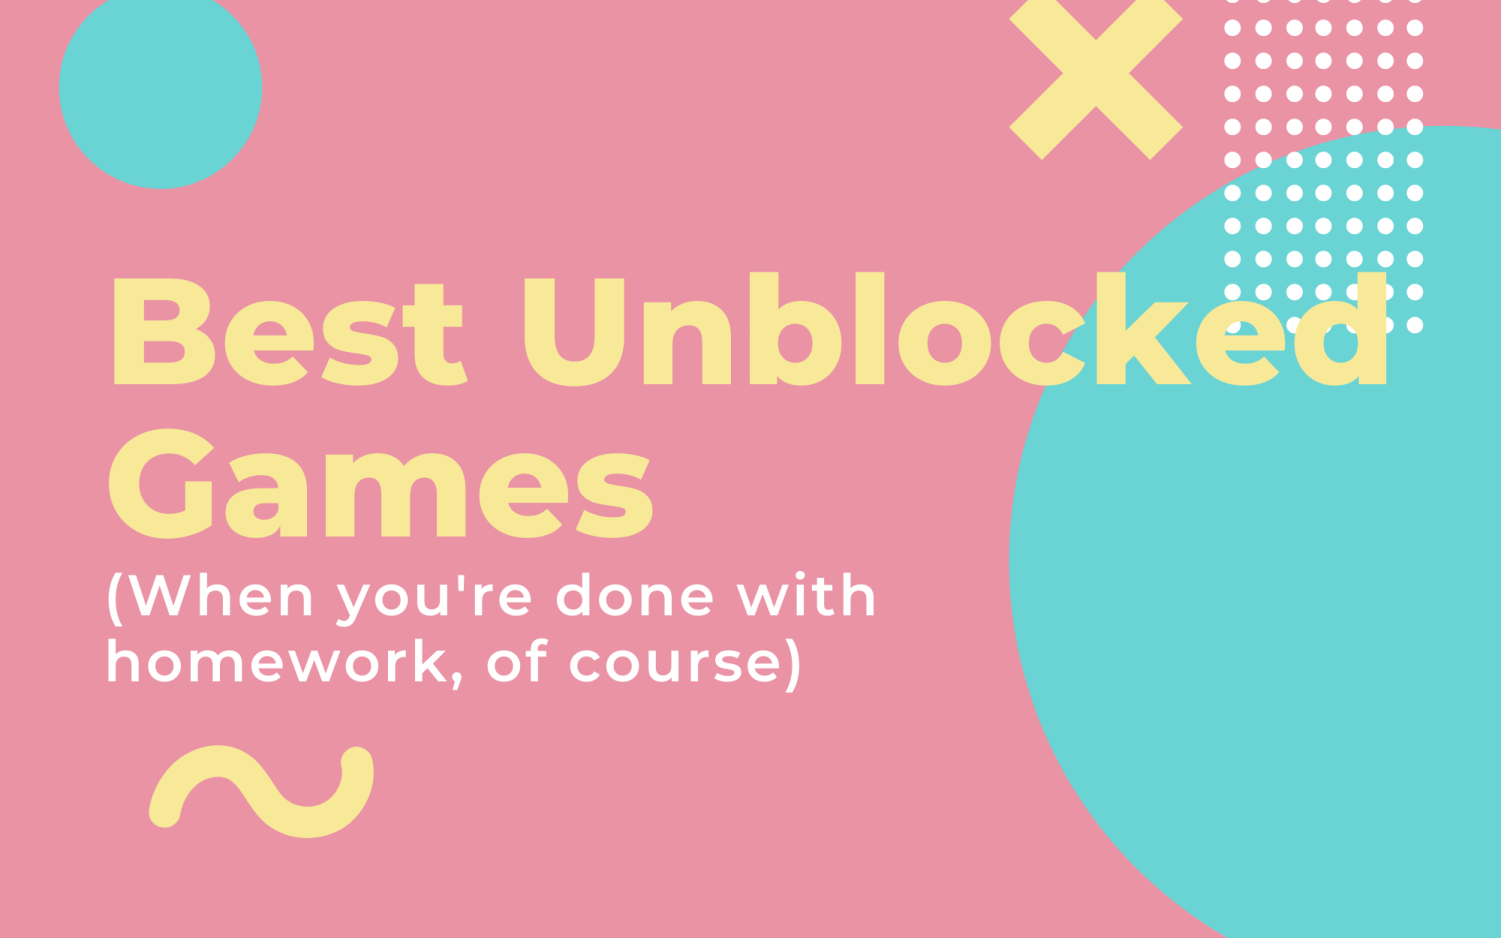 Best Unblocked Games to Play in School